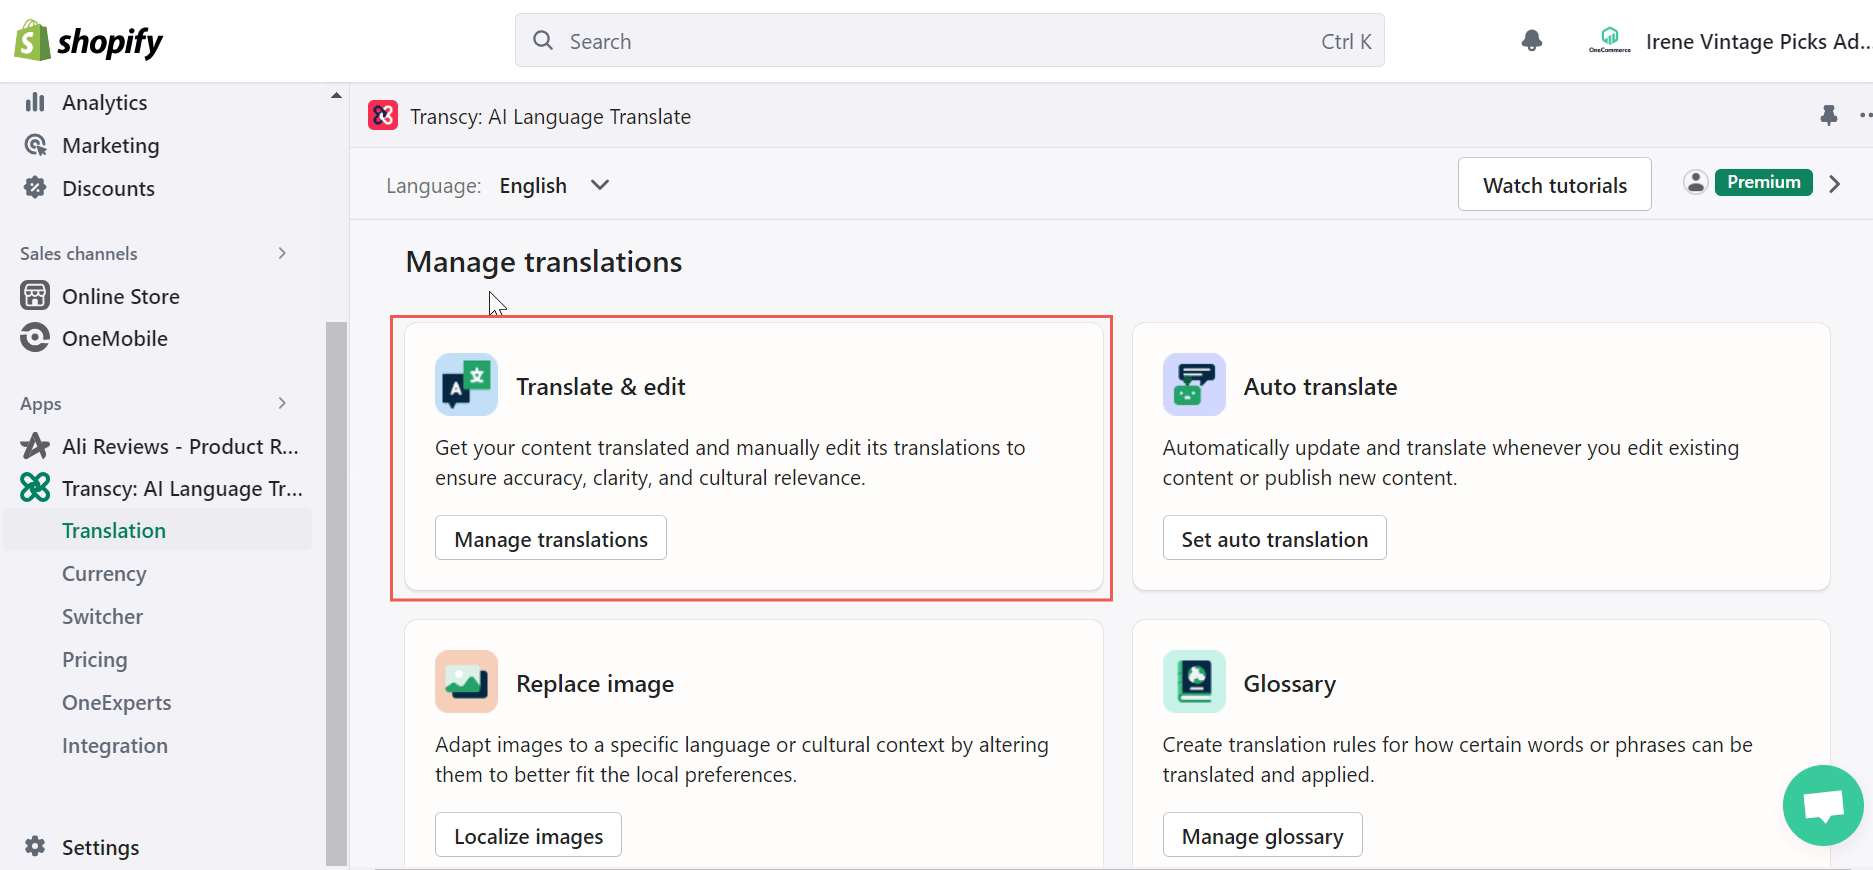 Next step of Shopify translation with Transcy is to Manage translation